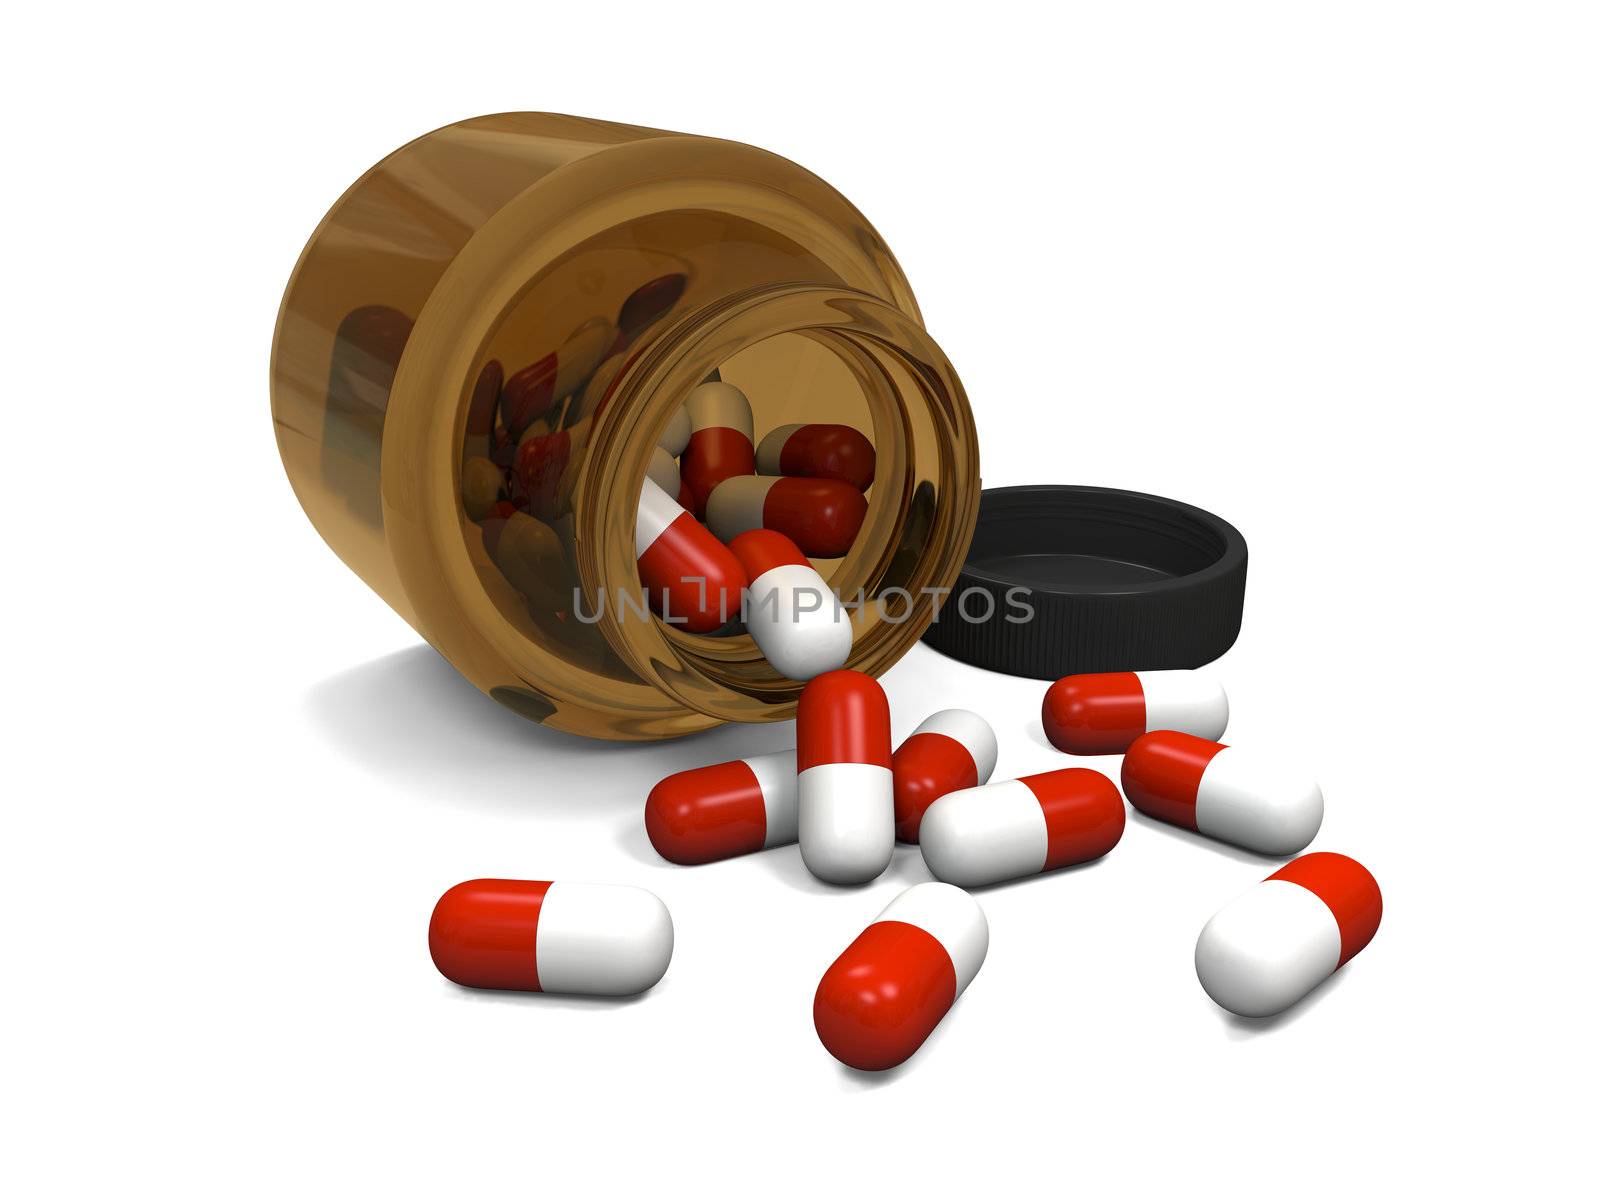 Pills by Harvepino